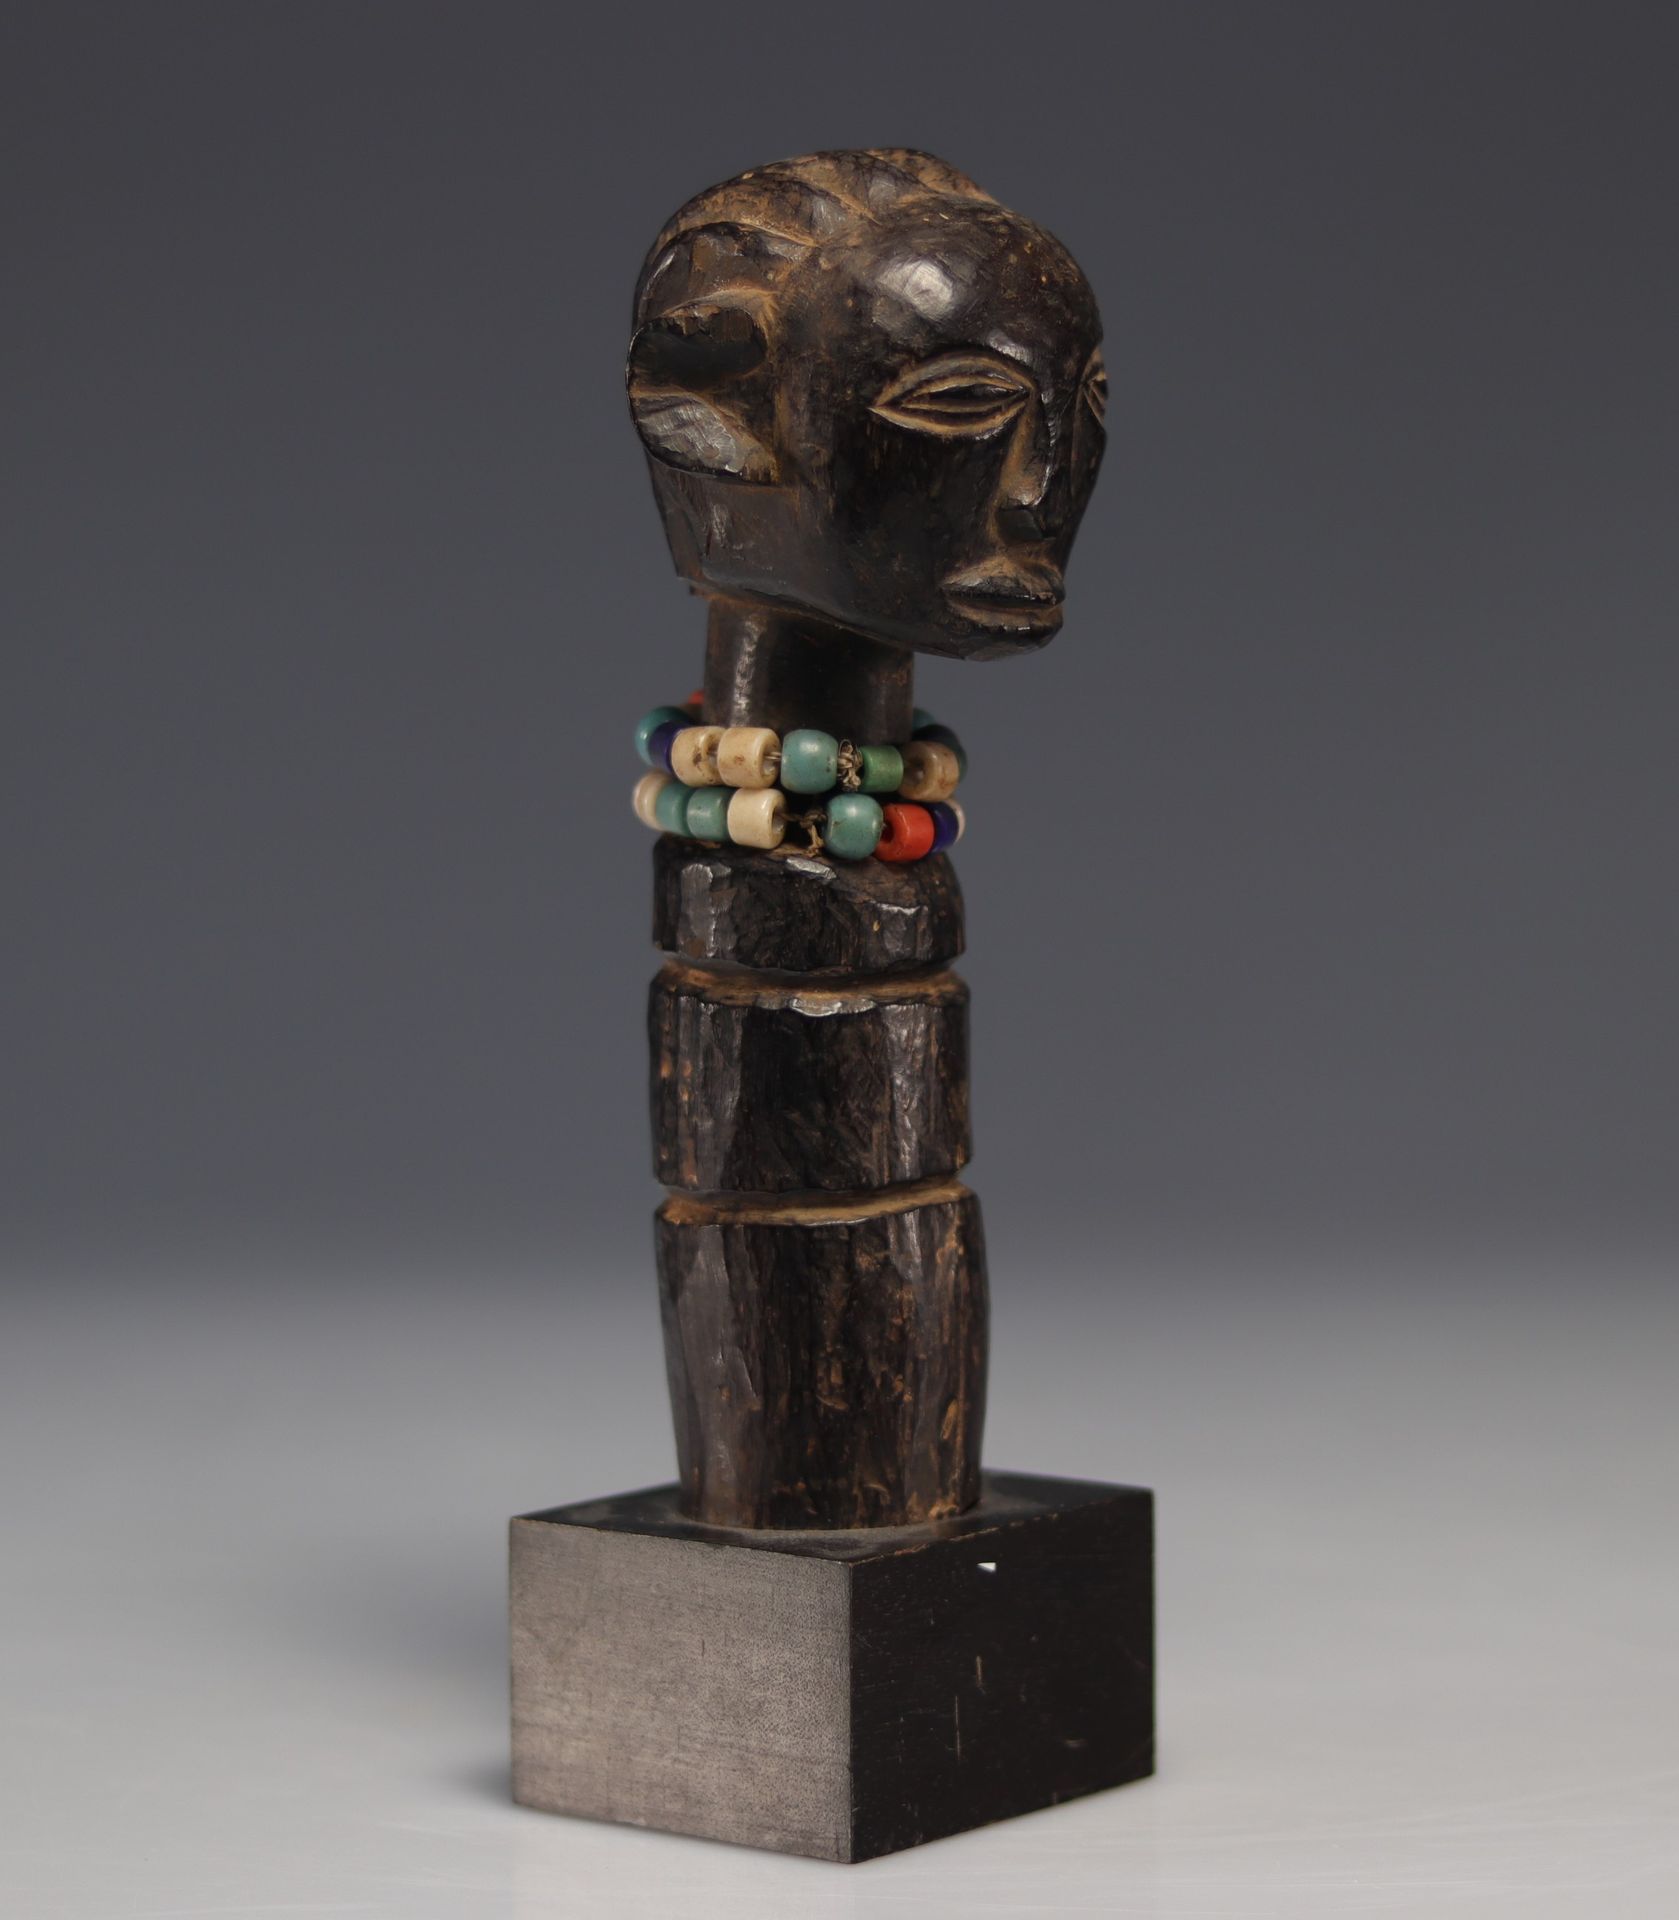 Null 坦桑尼亚的珍珠雕像。
重量：230克
地区：非洲
尺寸：高180毫米
状态：初见时：正常磨损/磨损